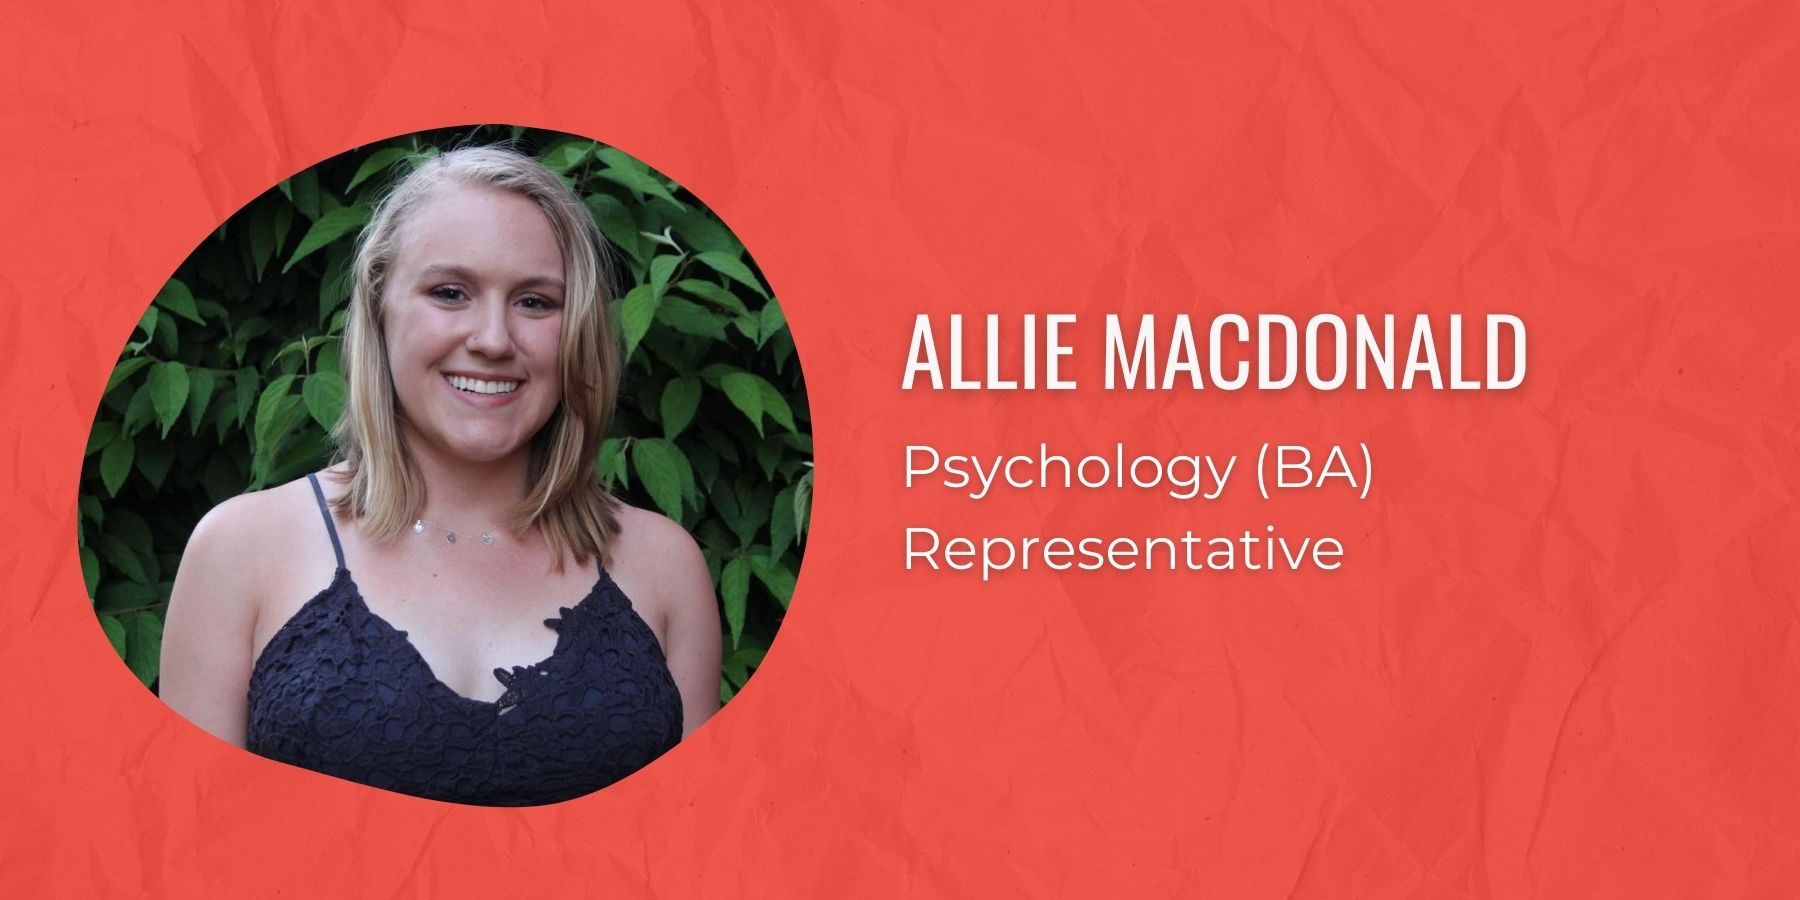 Image of Allie MacDonald and text: Psychology (BA) Representative